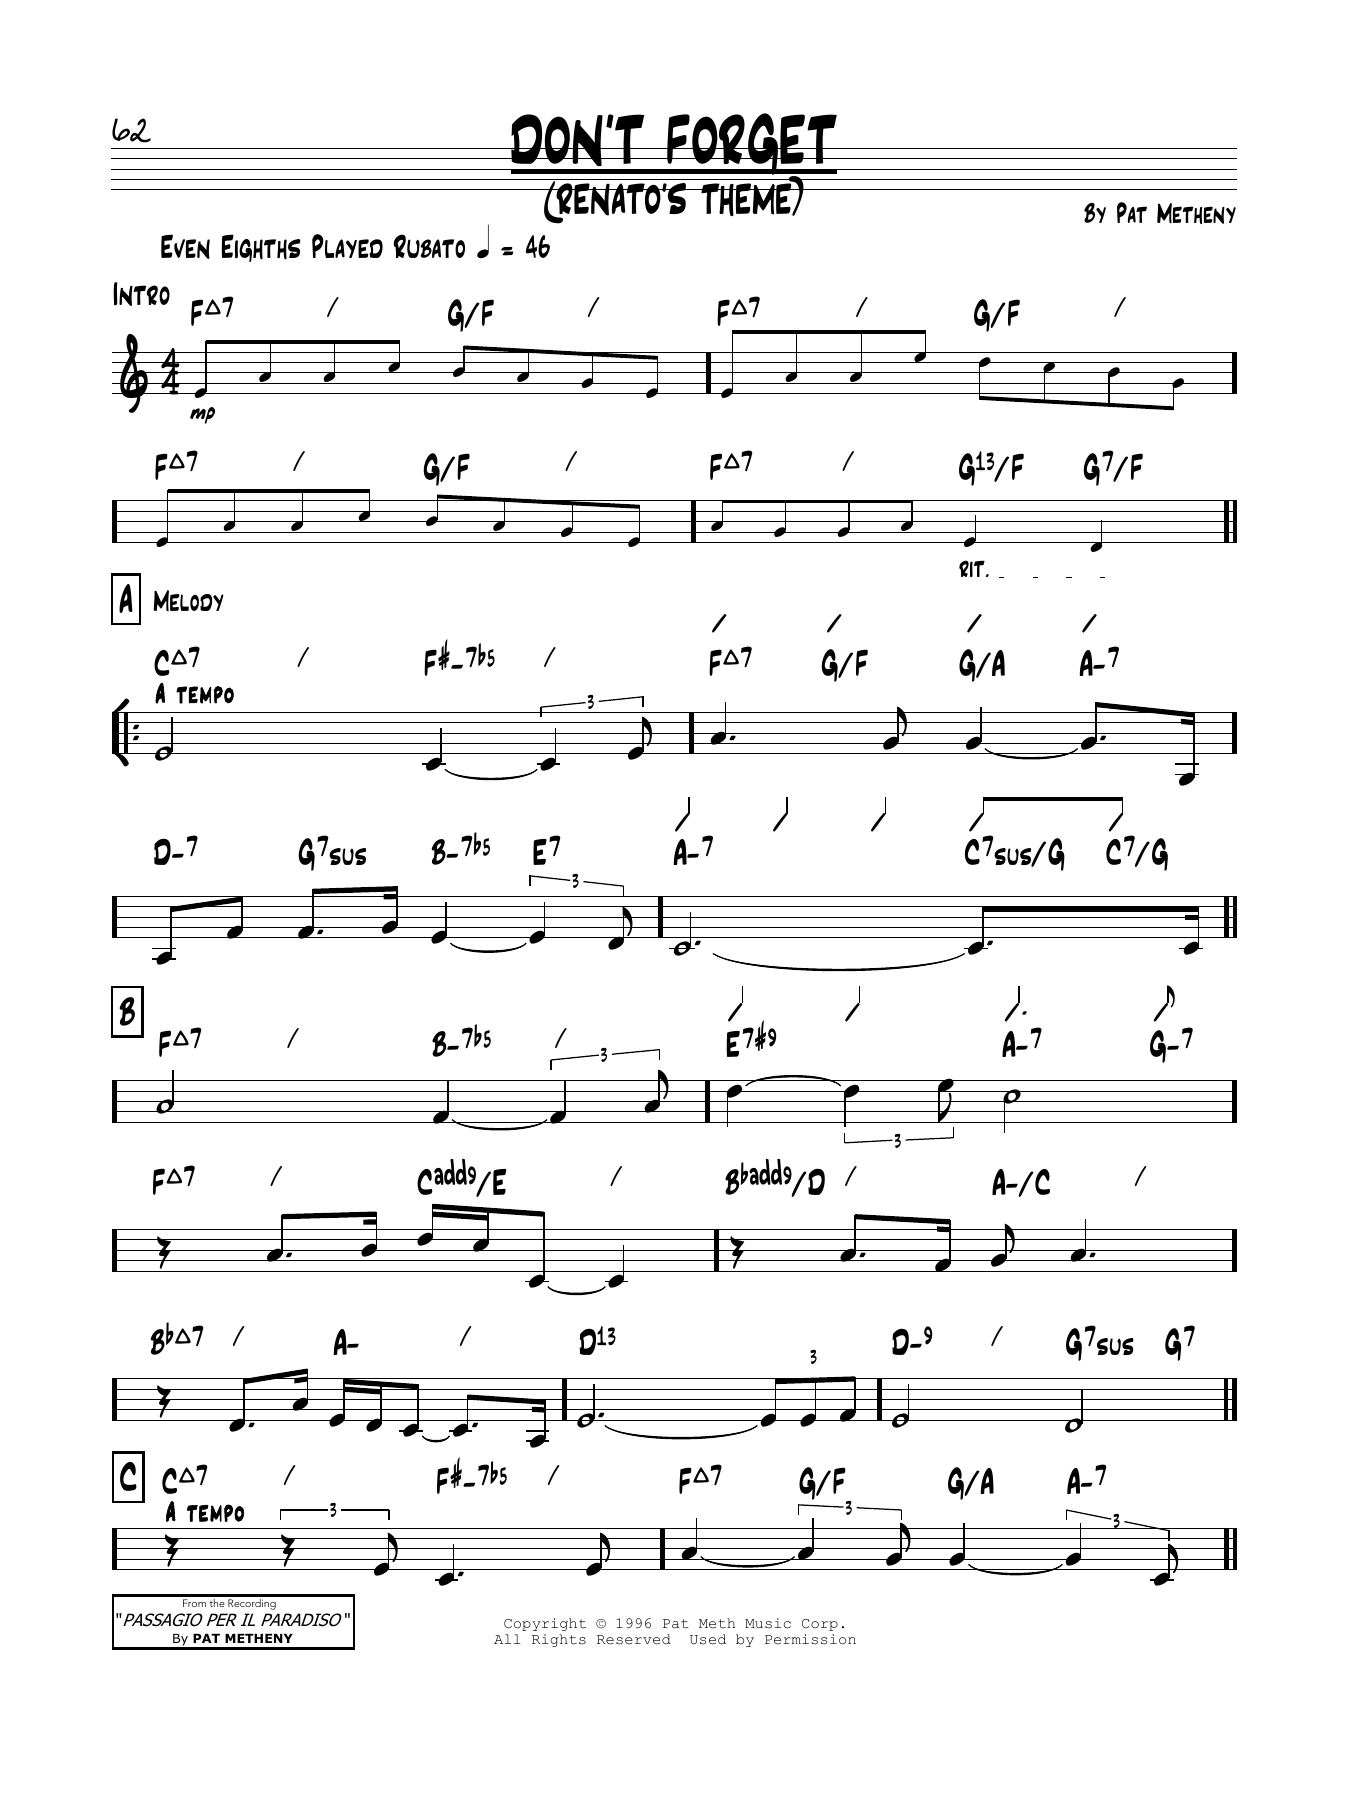 Download Pat Metheny Don't Forget (Renato's Theme) Sheet Music